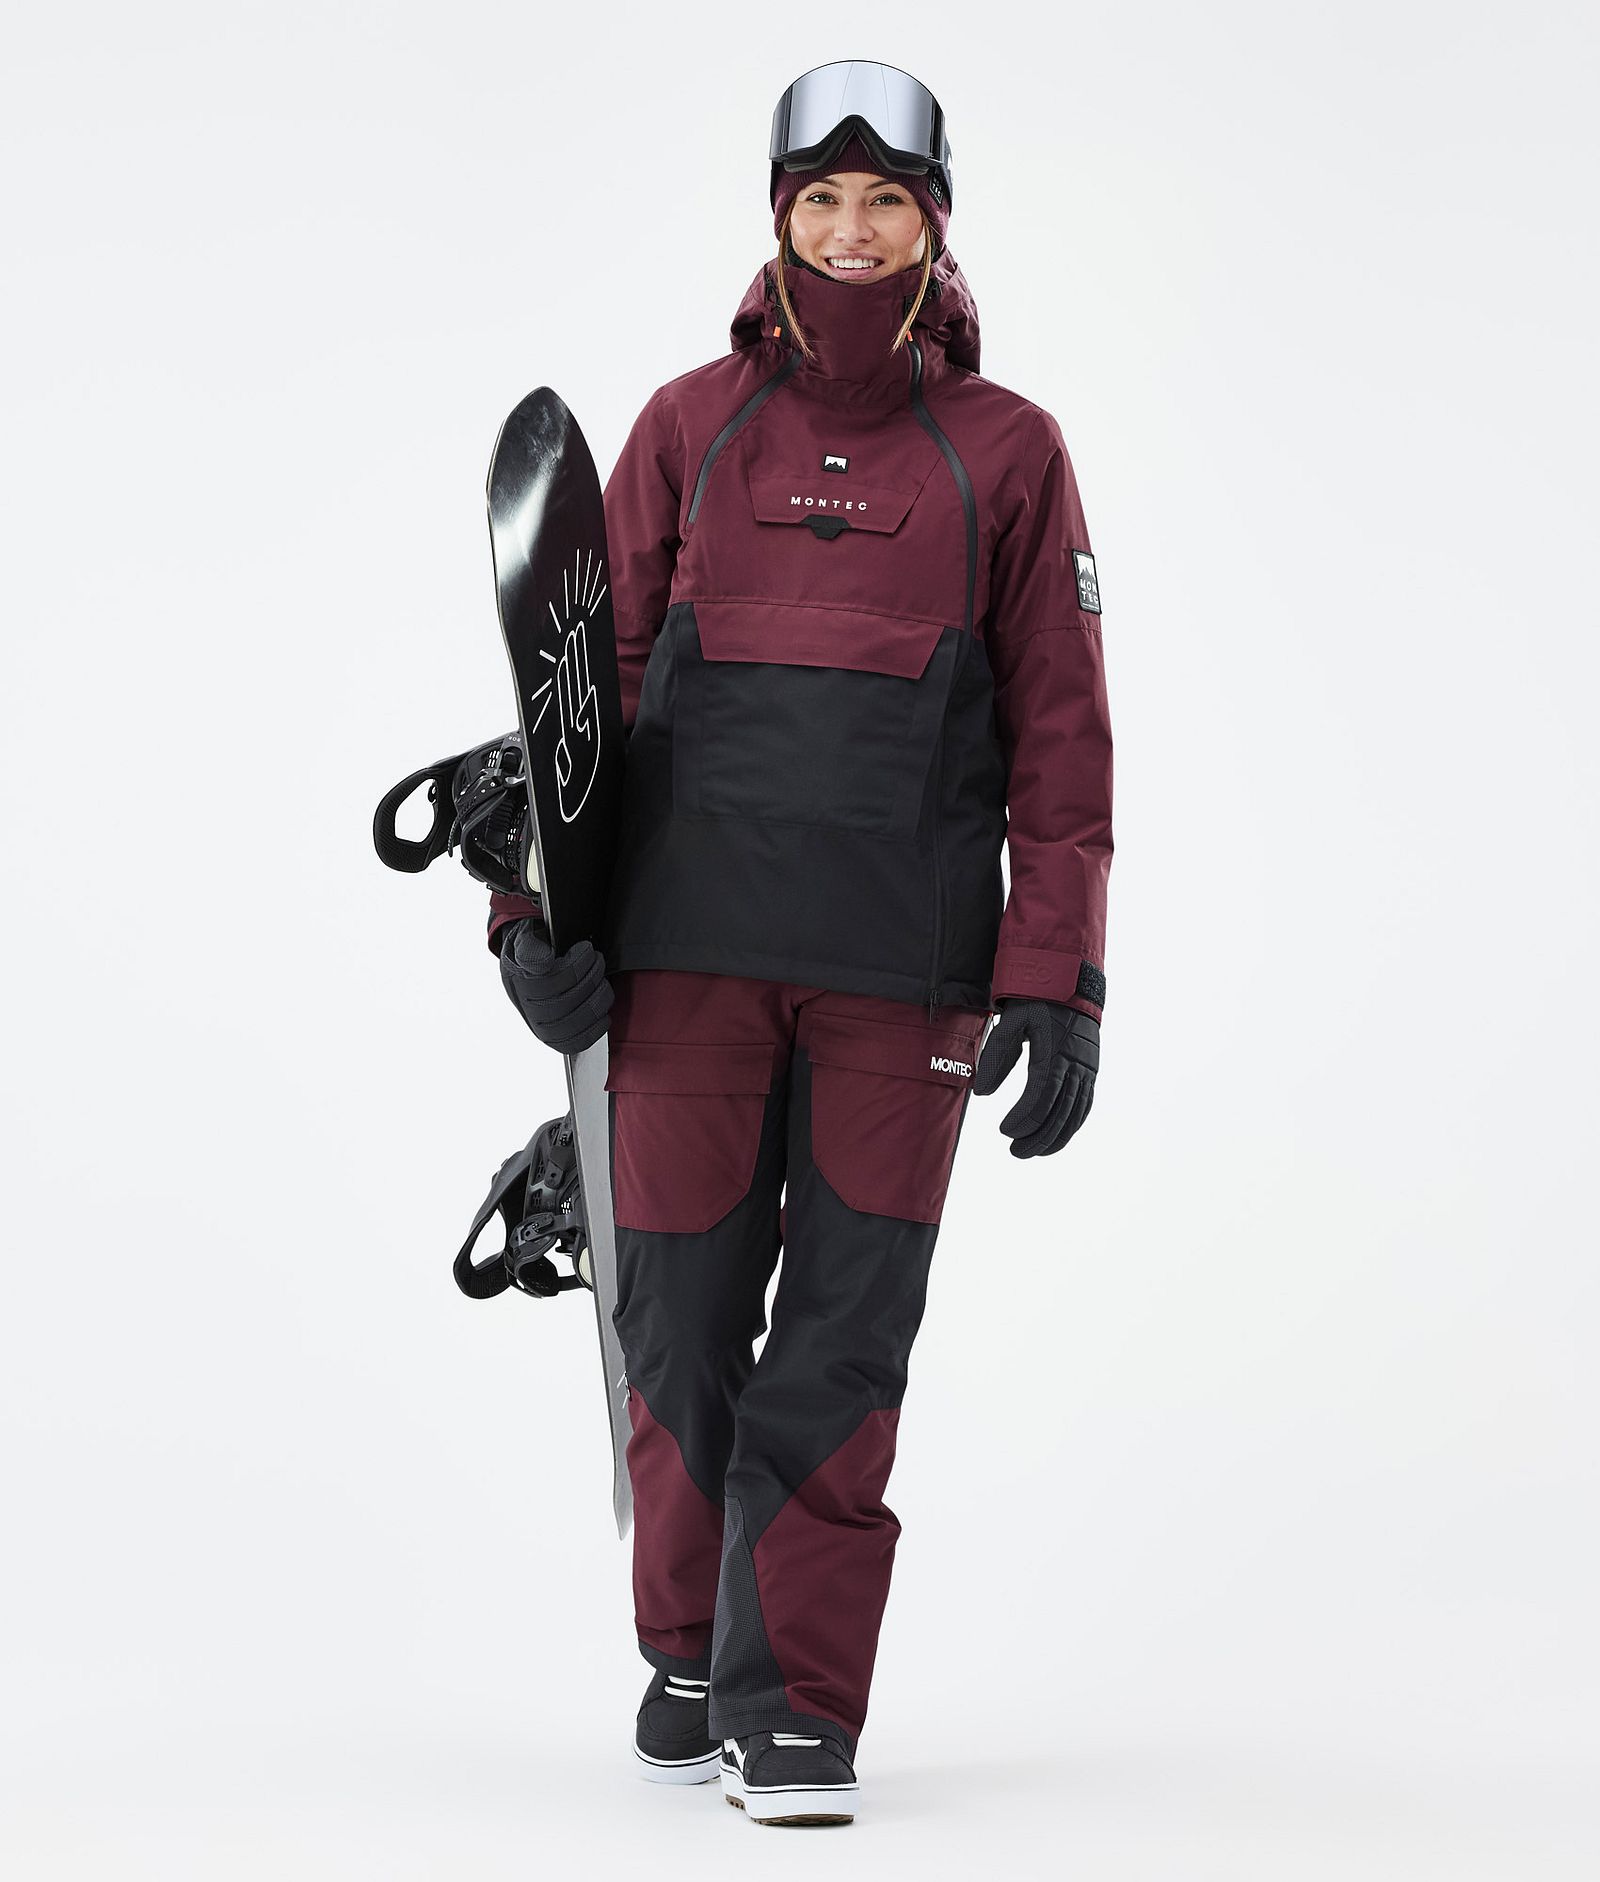 Montec Fawk W Snowboard Pants Women Burgundy/Black